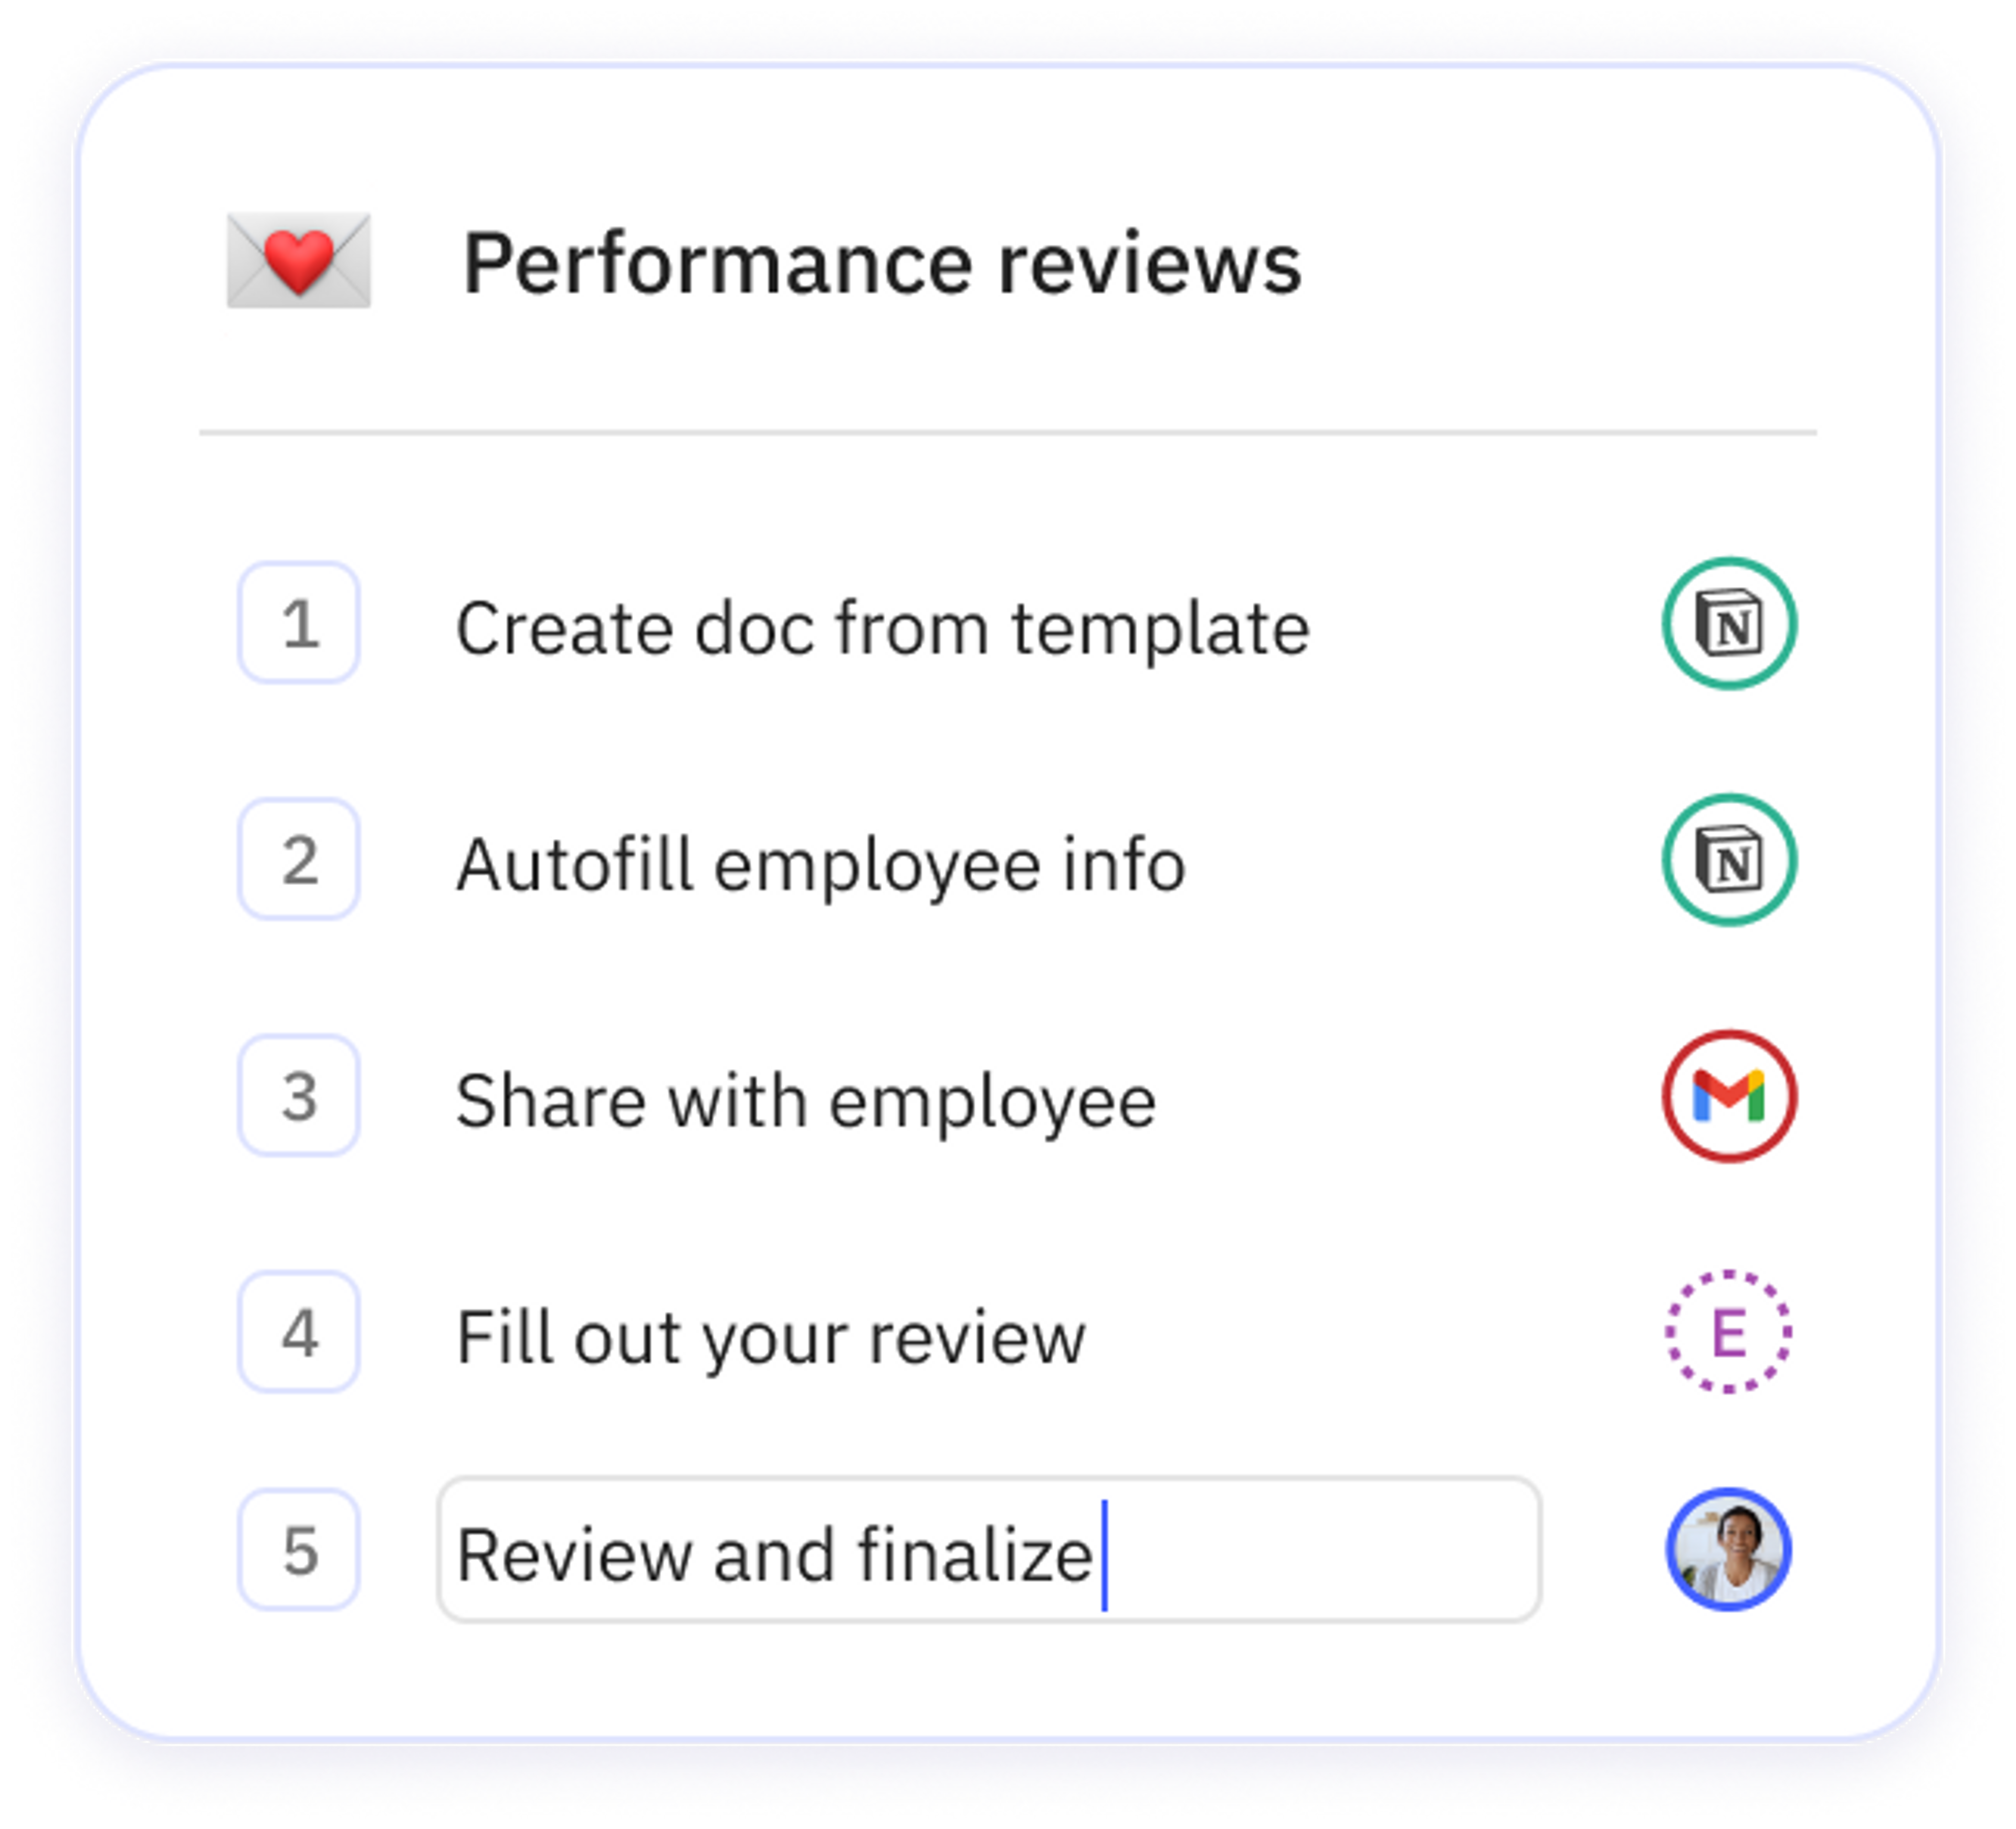 Run effective performance reviews